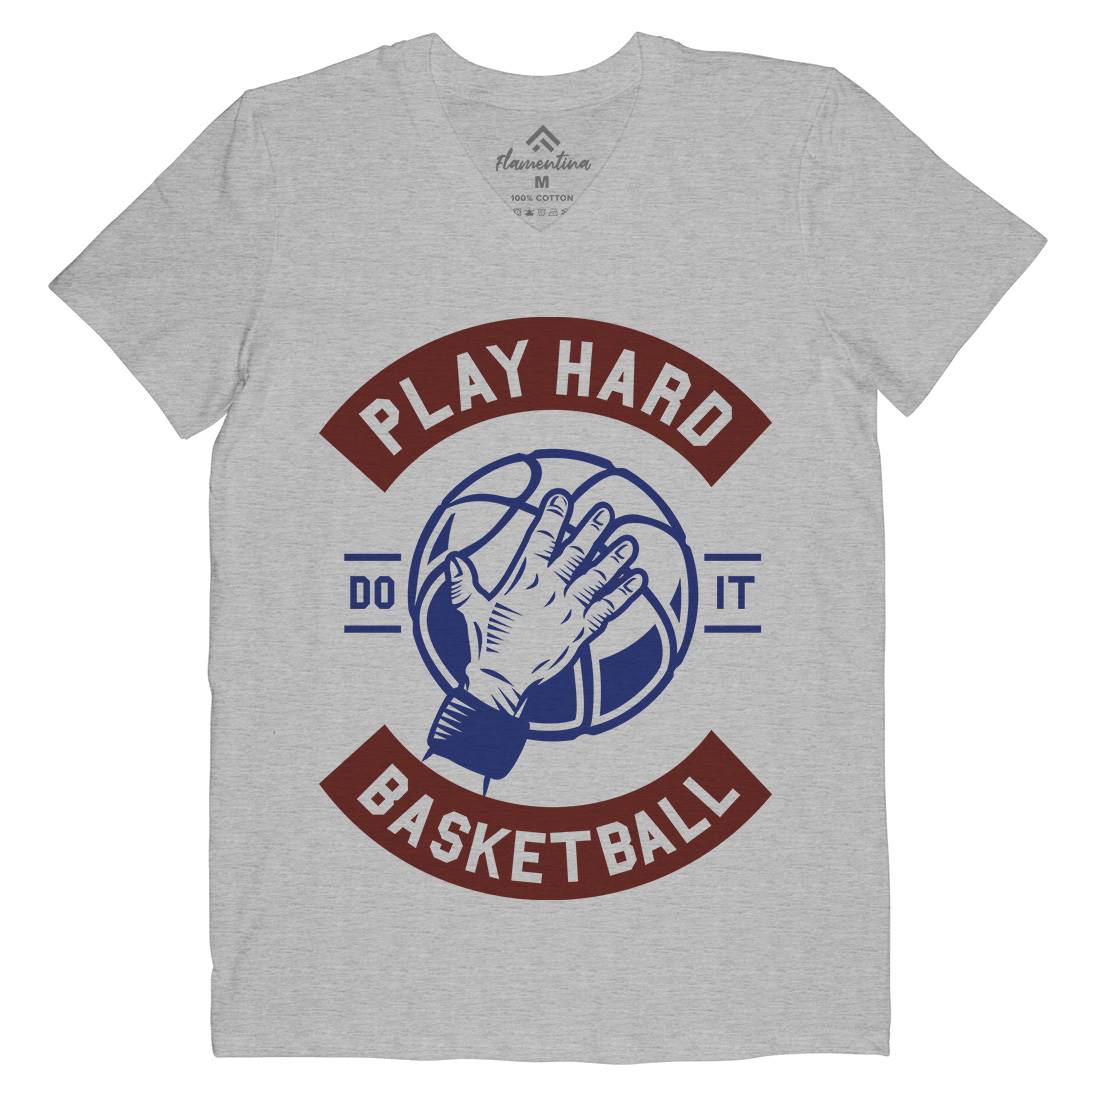 Play Hard Basketball Mens V-Neck T-Shirt Sport A261